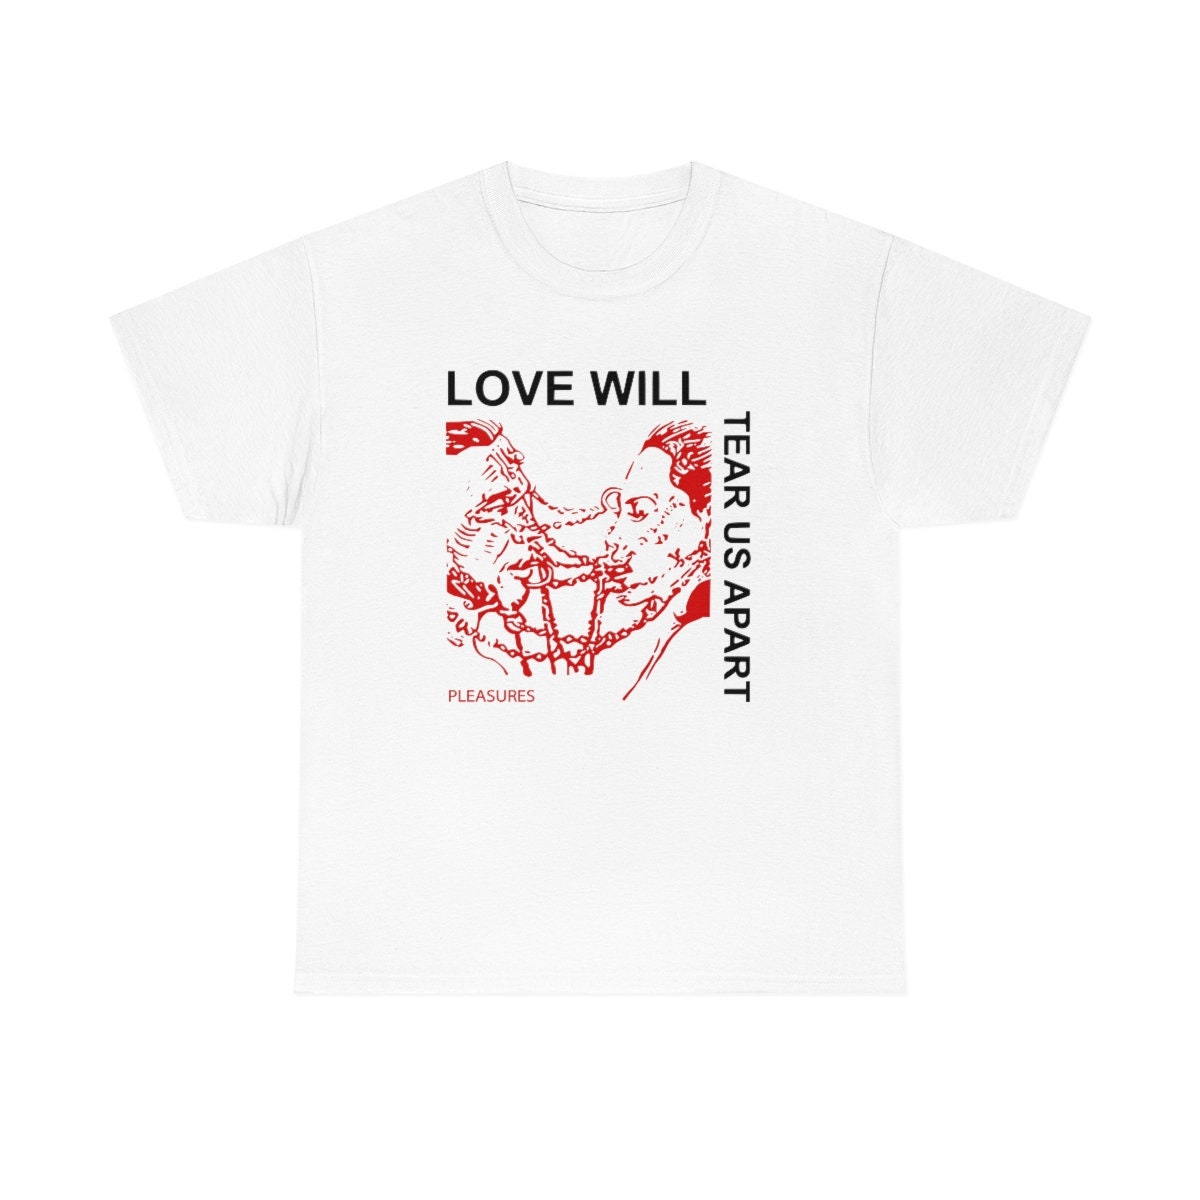 Discover Lil Peep Shirt, Love Will Tear Us Apart Shirt